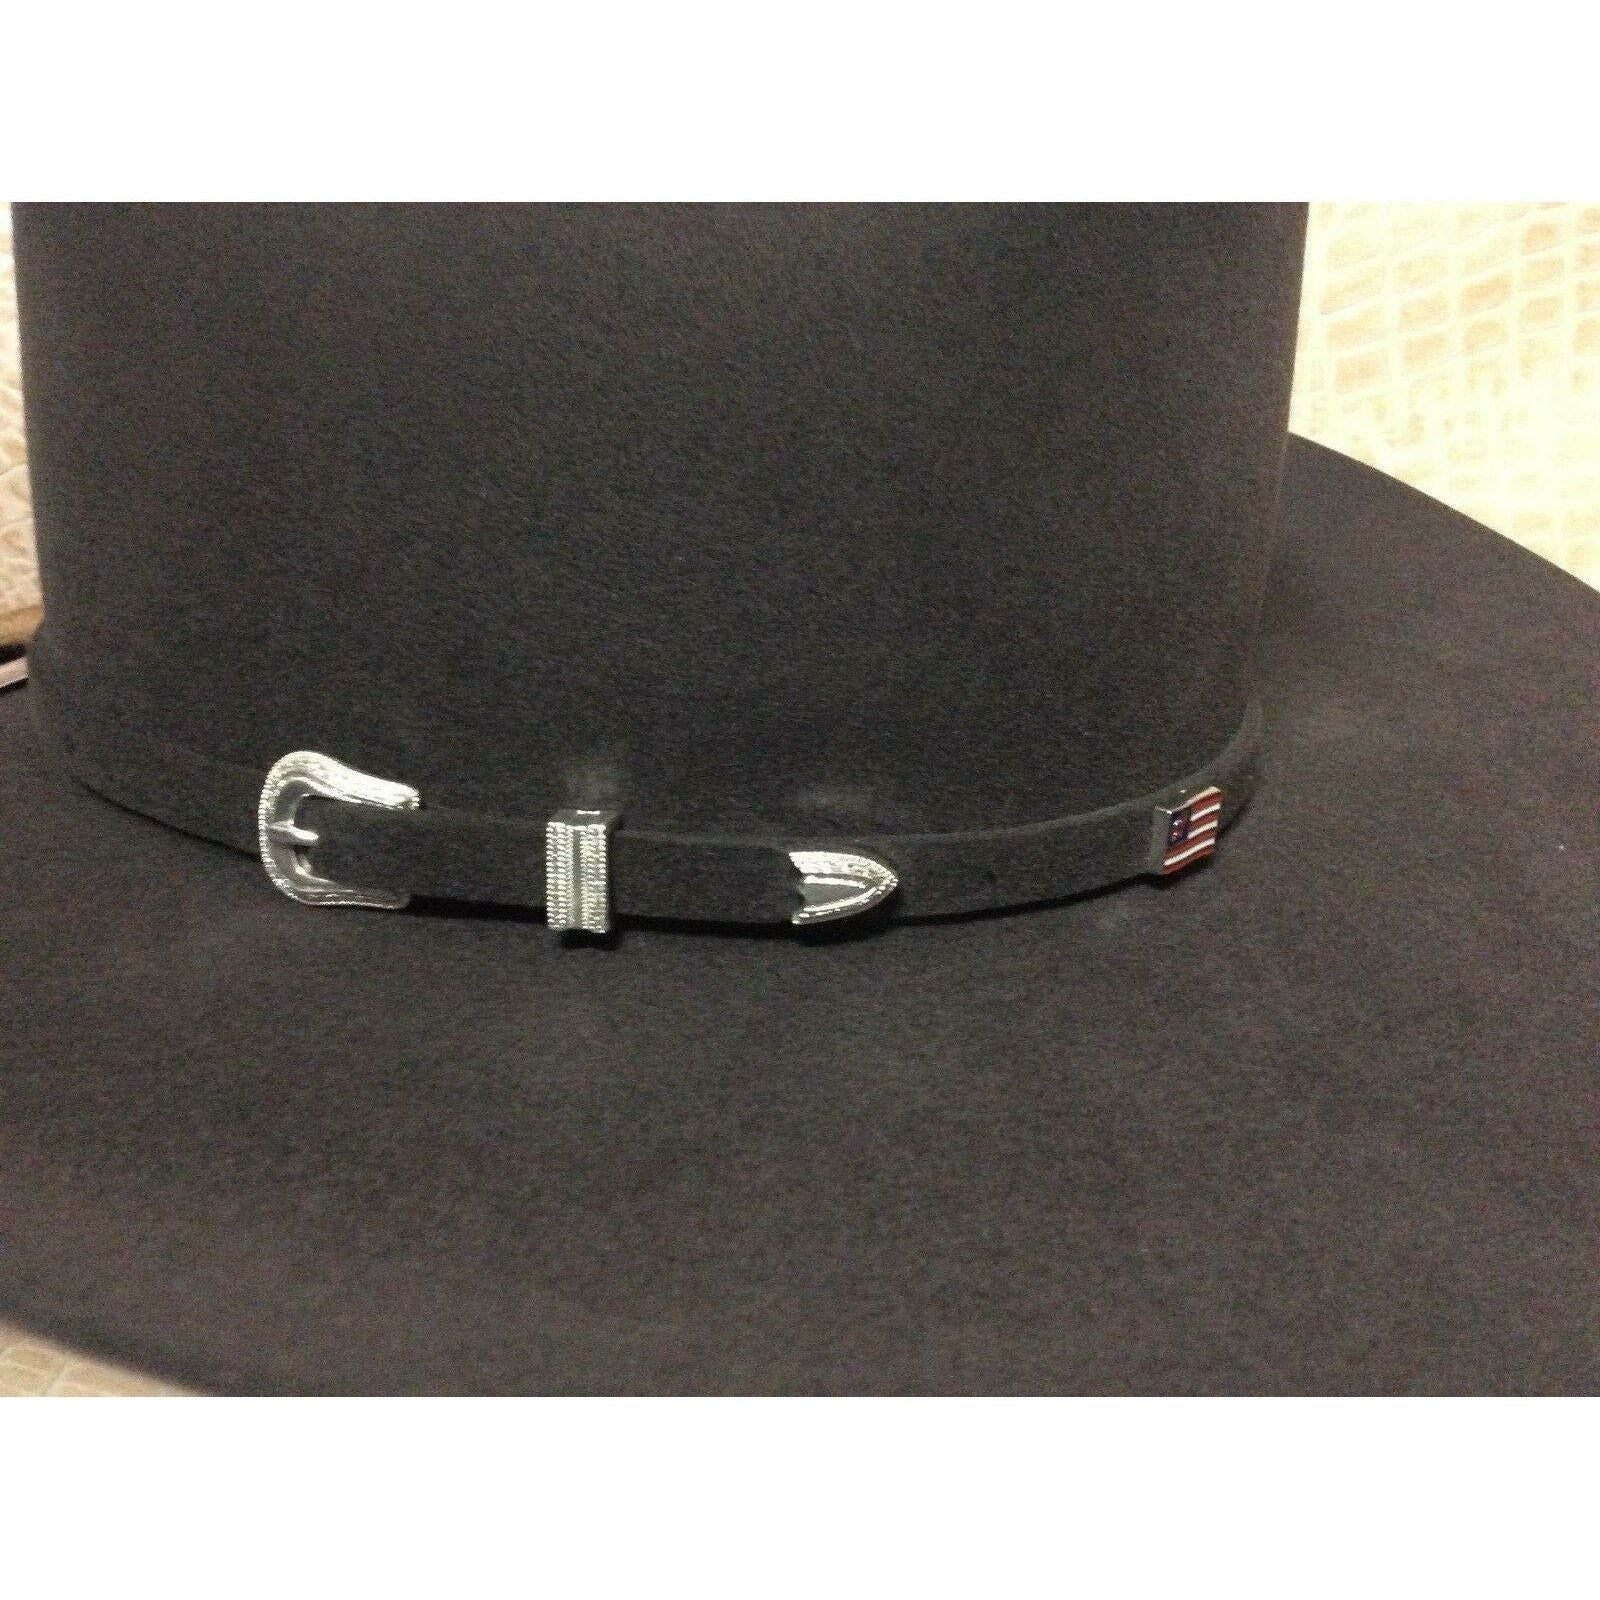 American Hat Co. Steel 7X Beaver Fur Felt Cowboy Hat Western Rodeo Stetson - CWesternwear